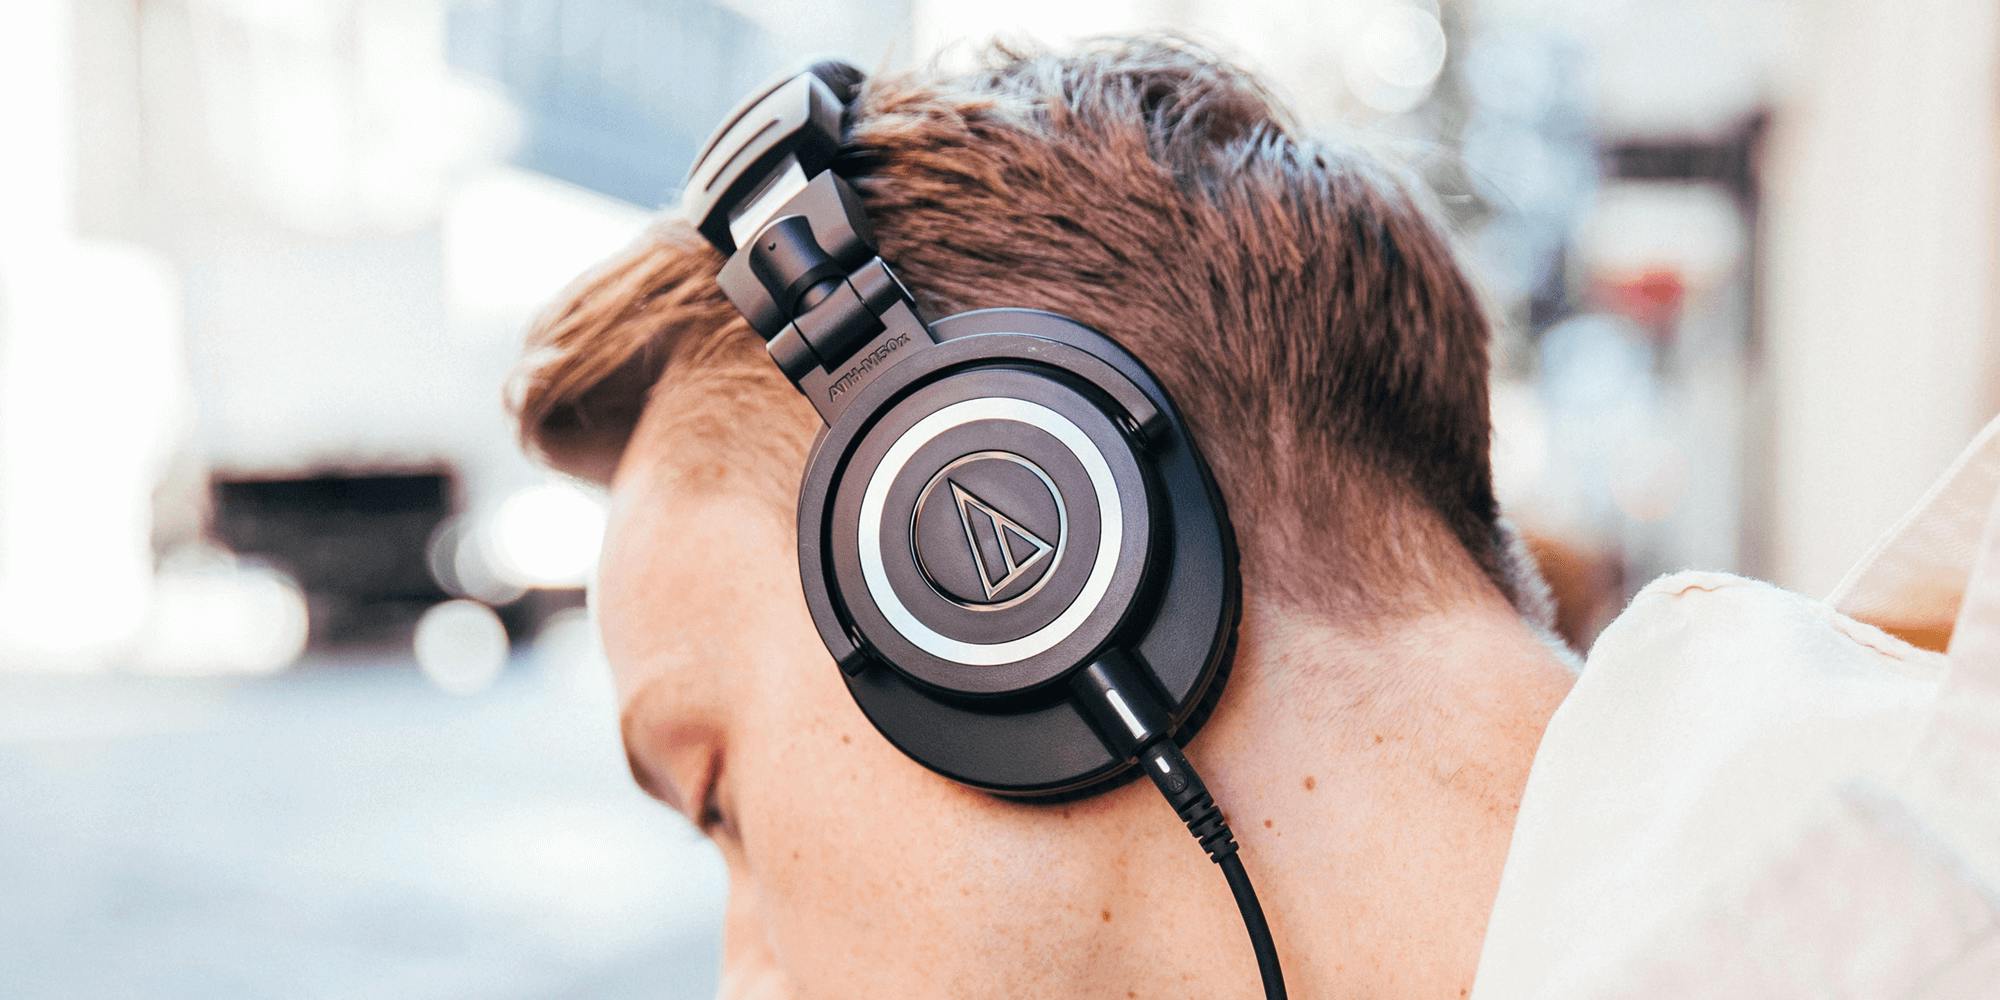 Audio-Technica ATH-M50X Studio Monitor Professional Headphones - Andertons  Music Co.